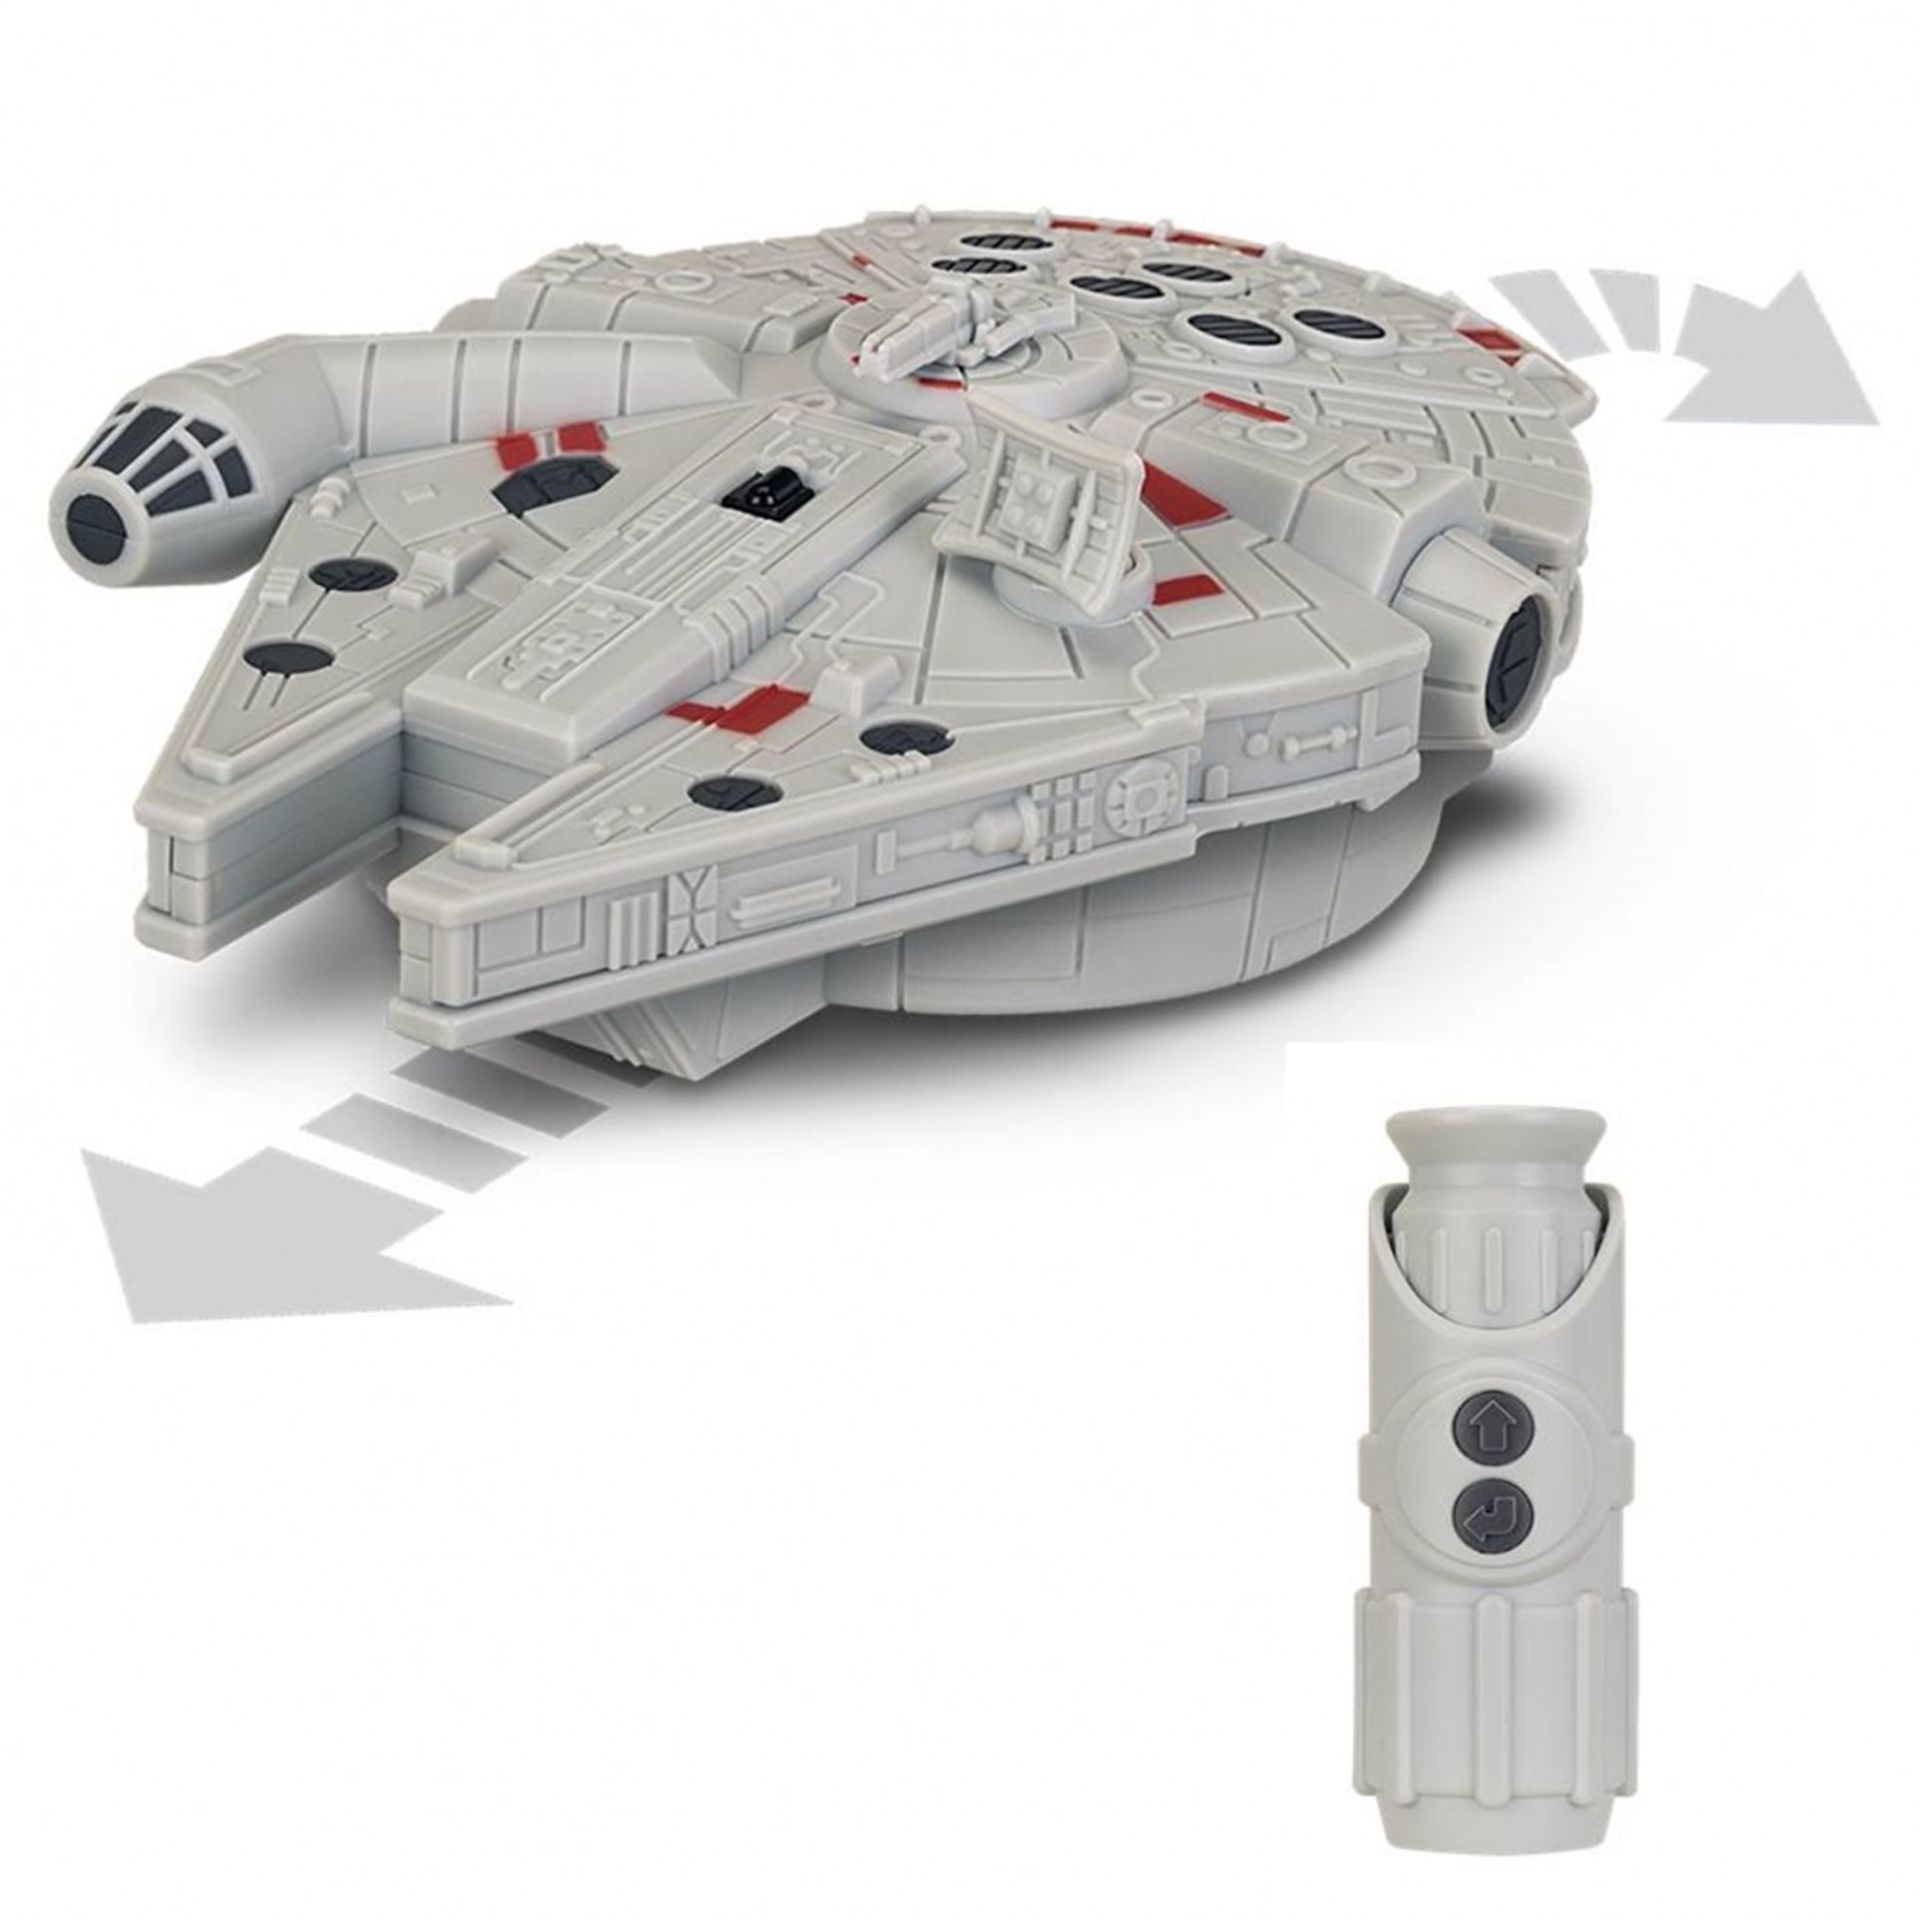 V *TRADE QTY* Brand New Star Wars Millenium Falcon Remote Control Vehicle Amazon Price £23.91 X 3